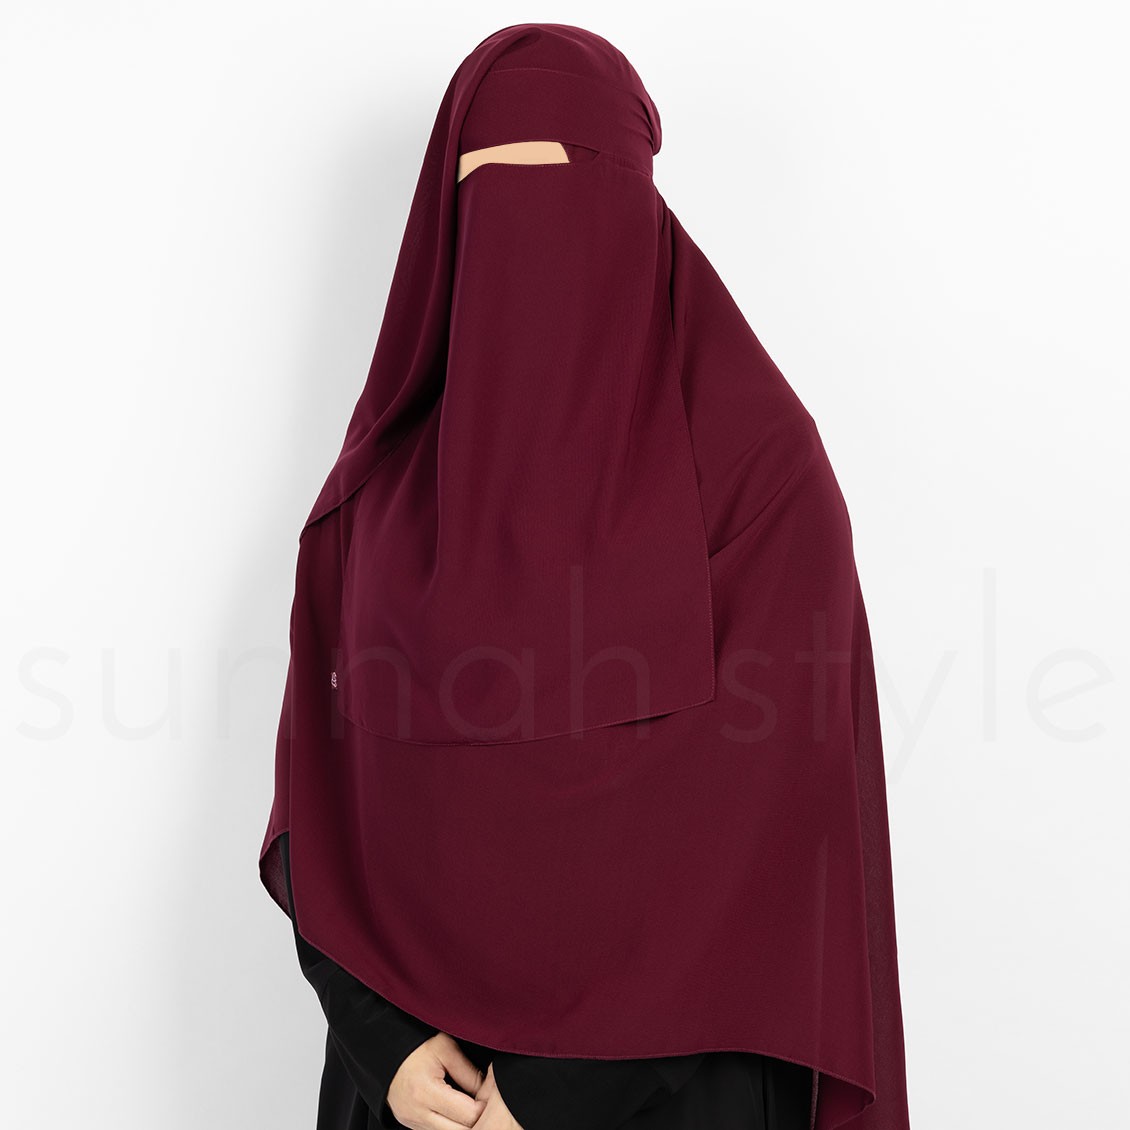 Sunnah Style Narrow No-Pinch Two Layer Niqab Burgundy